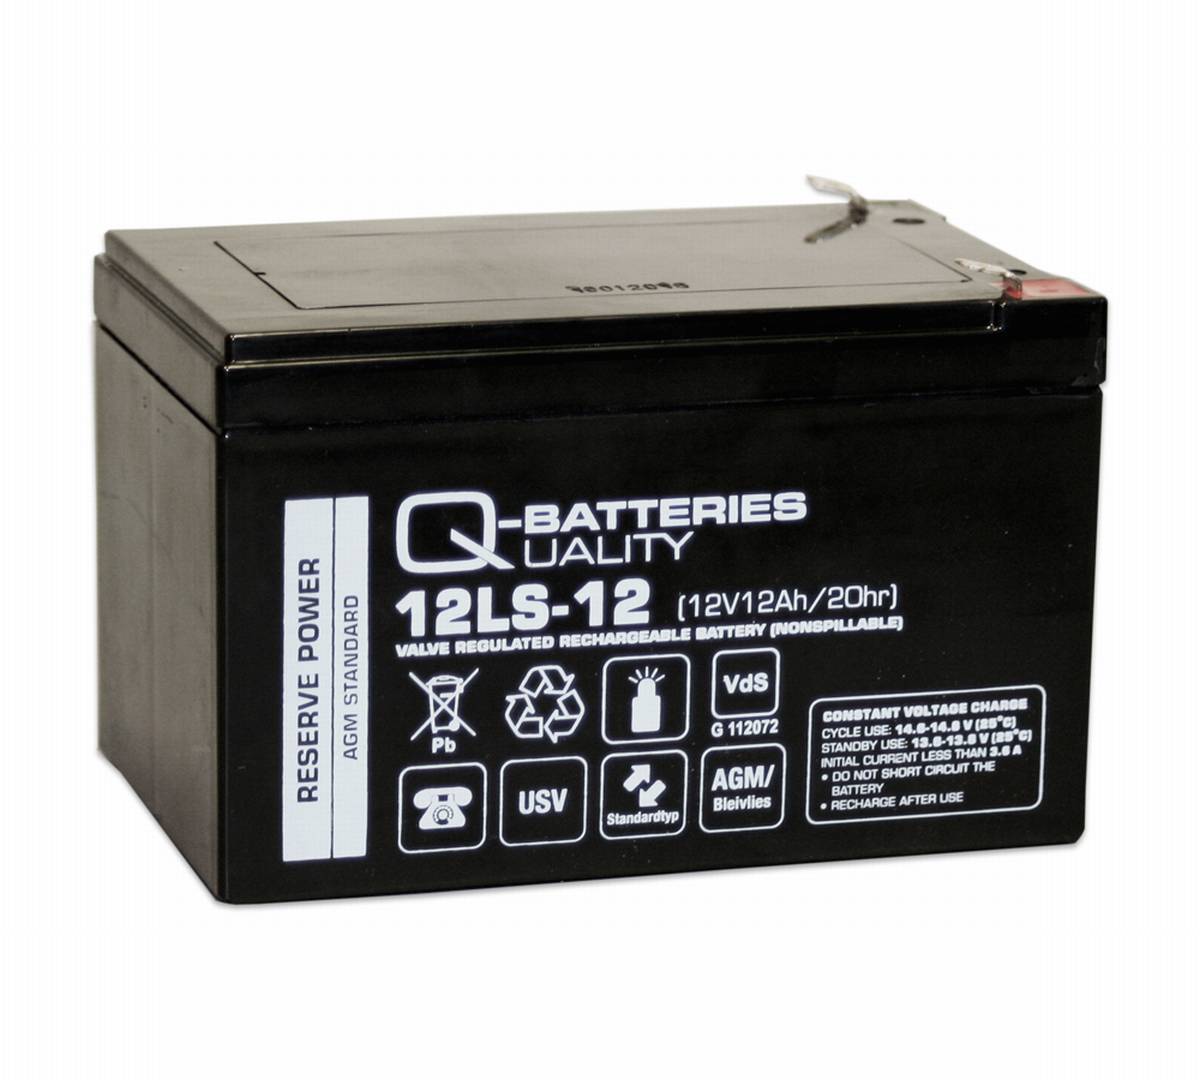 Batteria di ricambio per Panasonic LC-RA1212PG1 12V 12Ah AGM batteria VdS